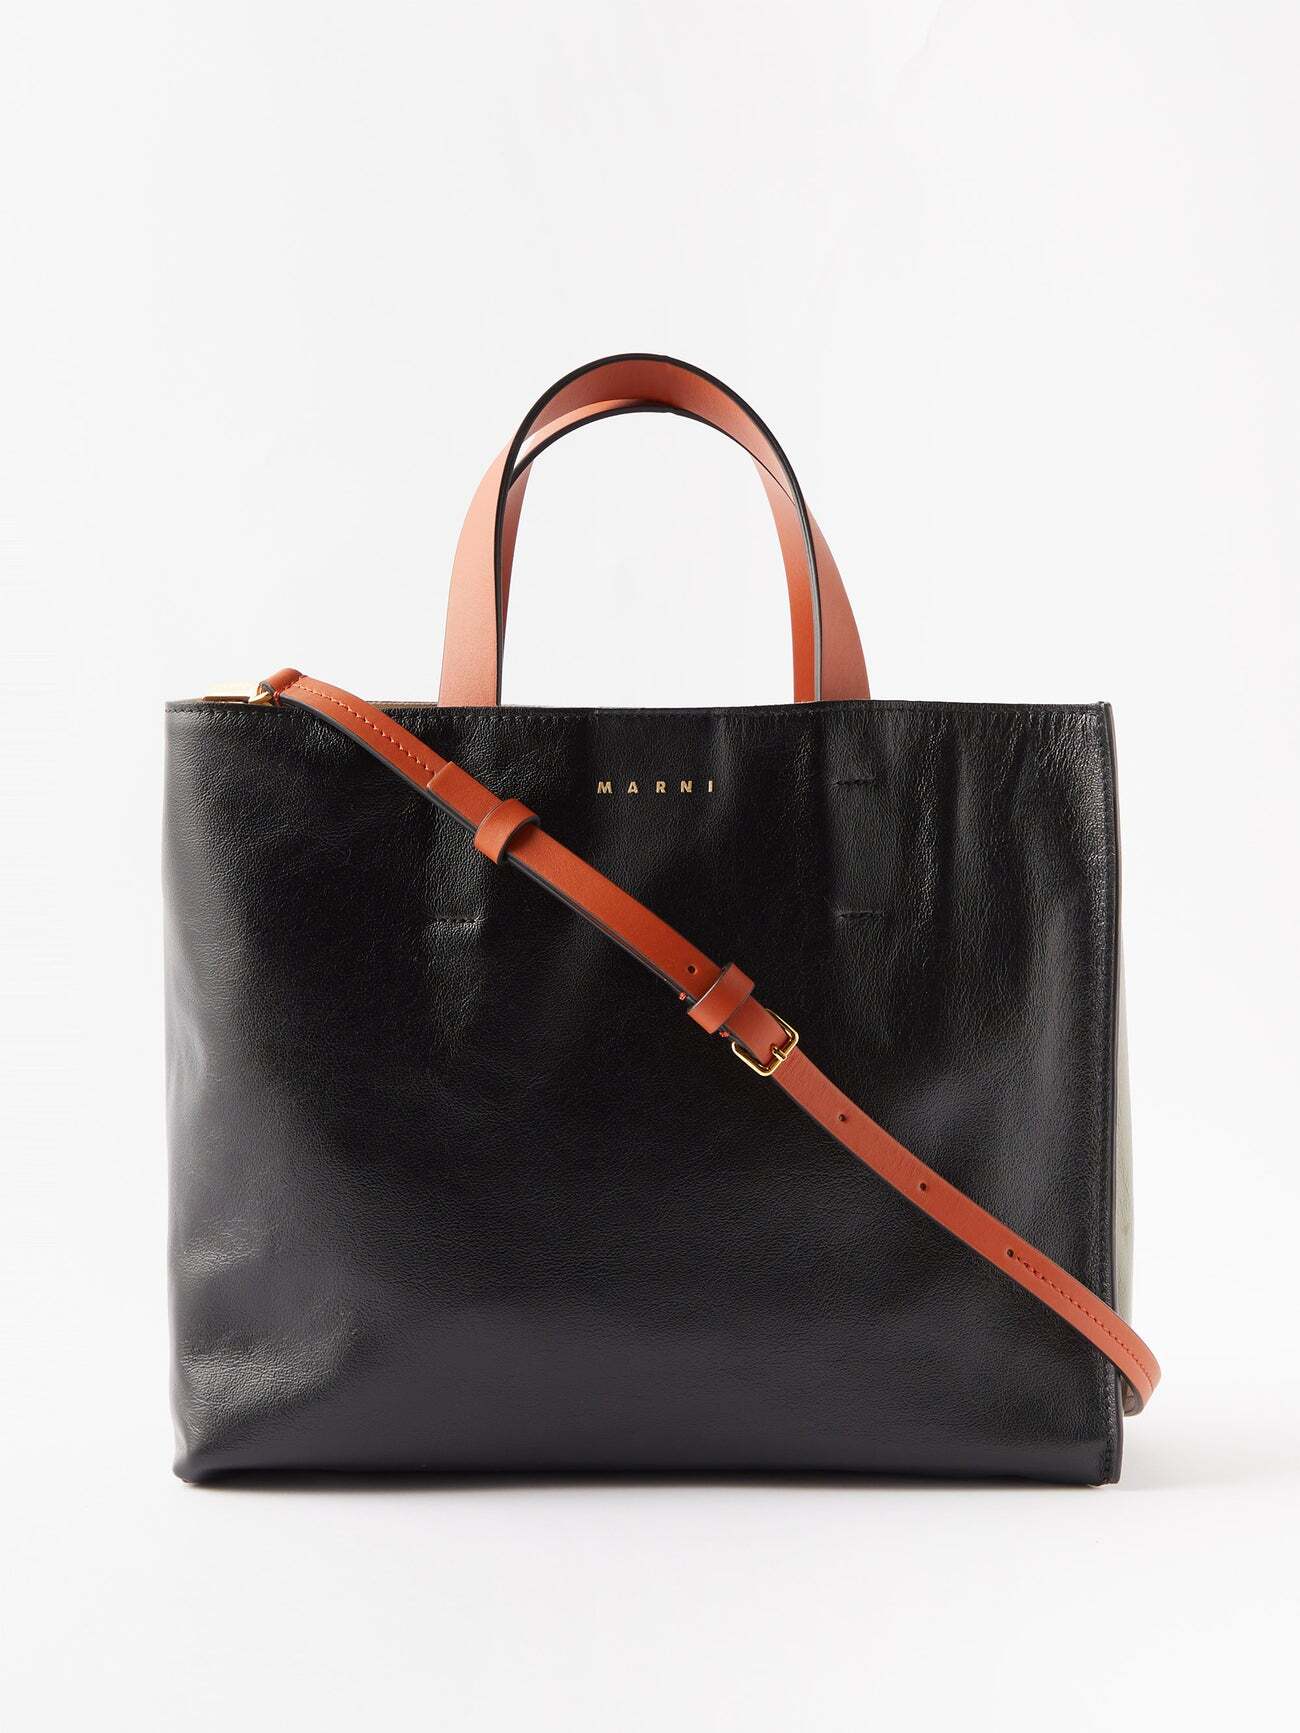 Marni - Museo Small Leather Tote Bag - Womens - Black Multi